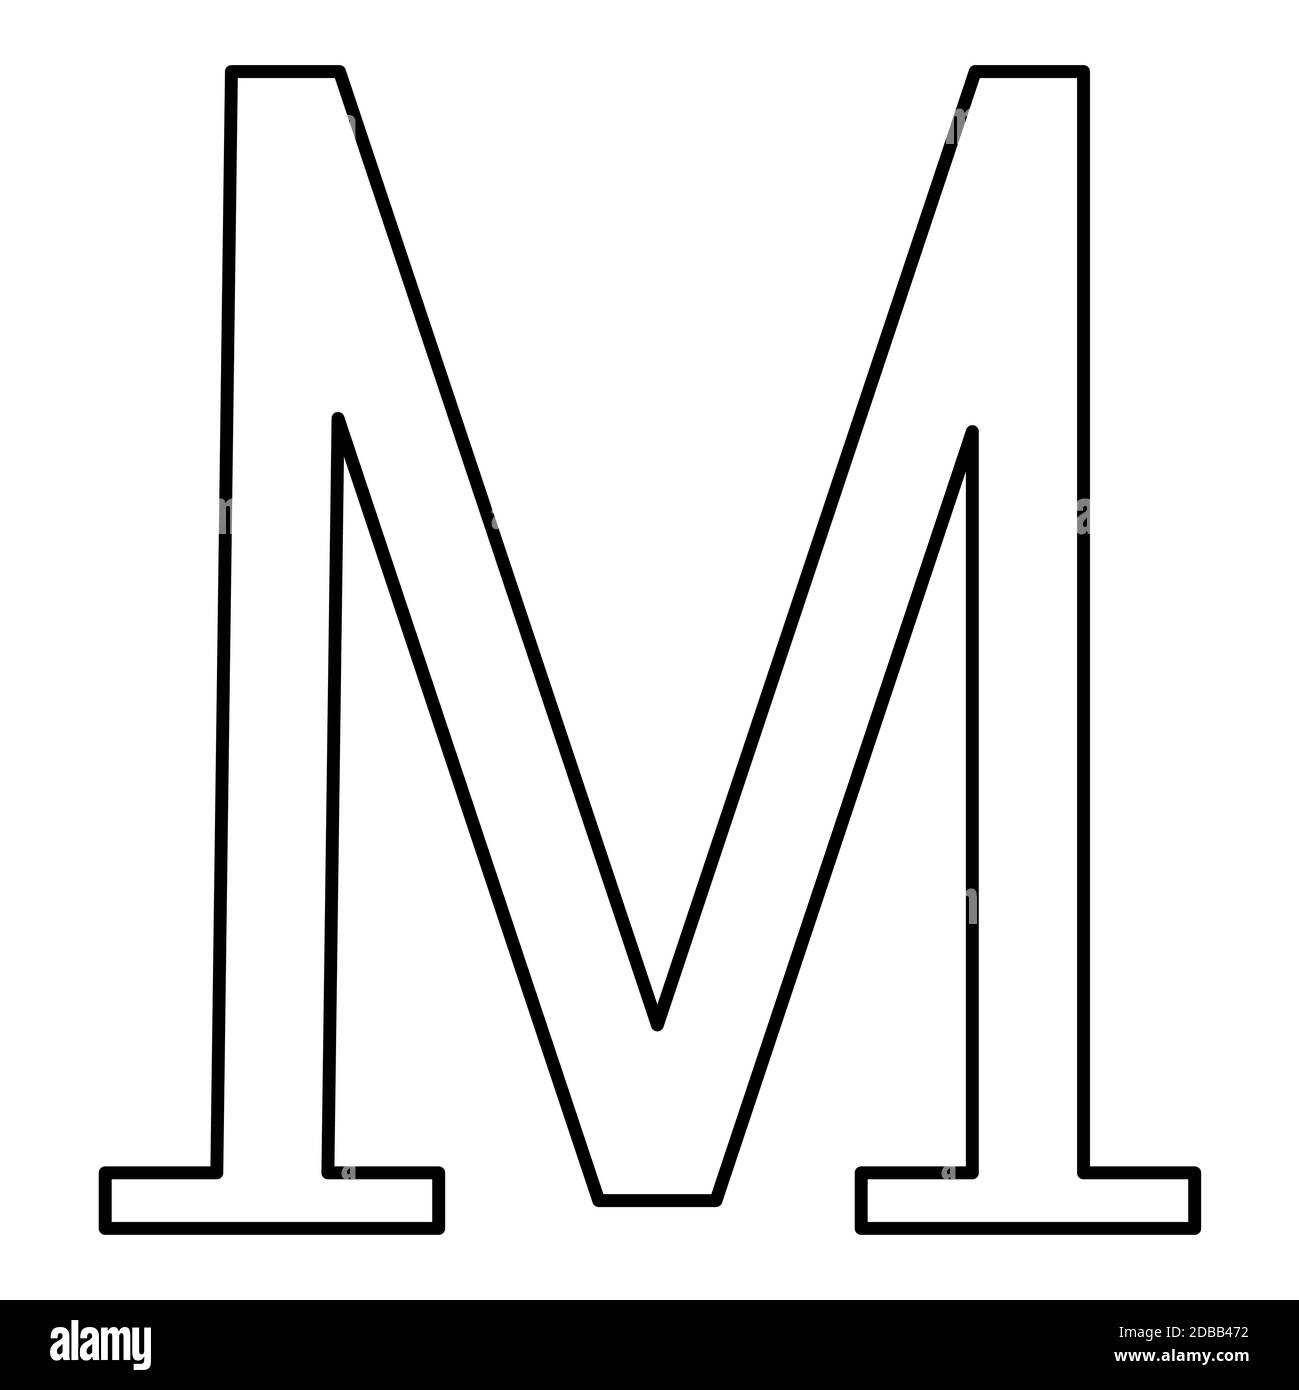 Mu greek symbol capital letter uppercase font icon outline black color vector illustration flat style simple image Stock Photo